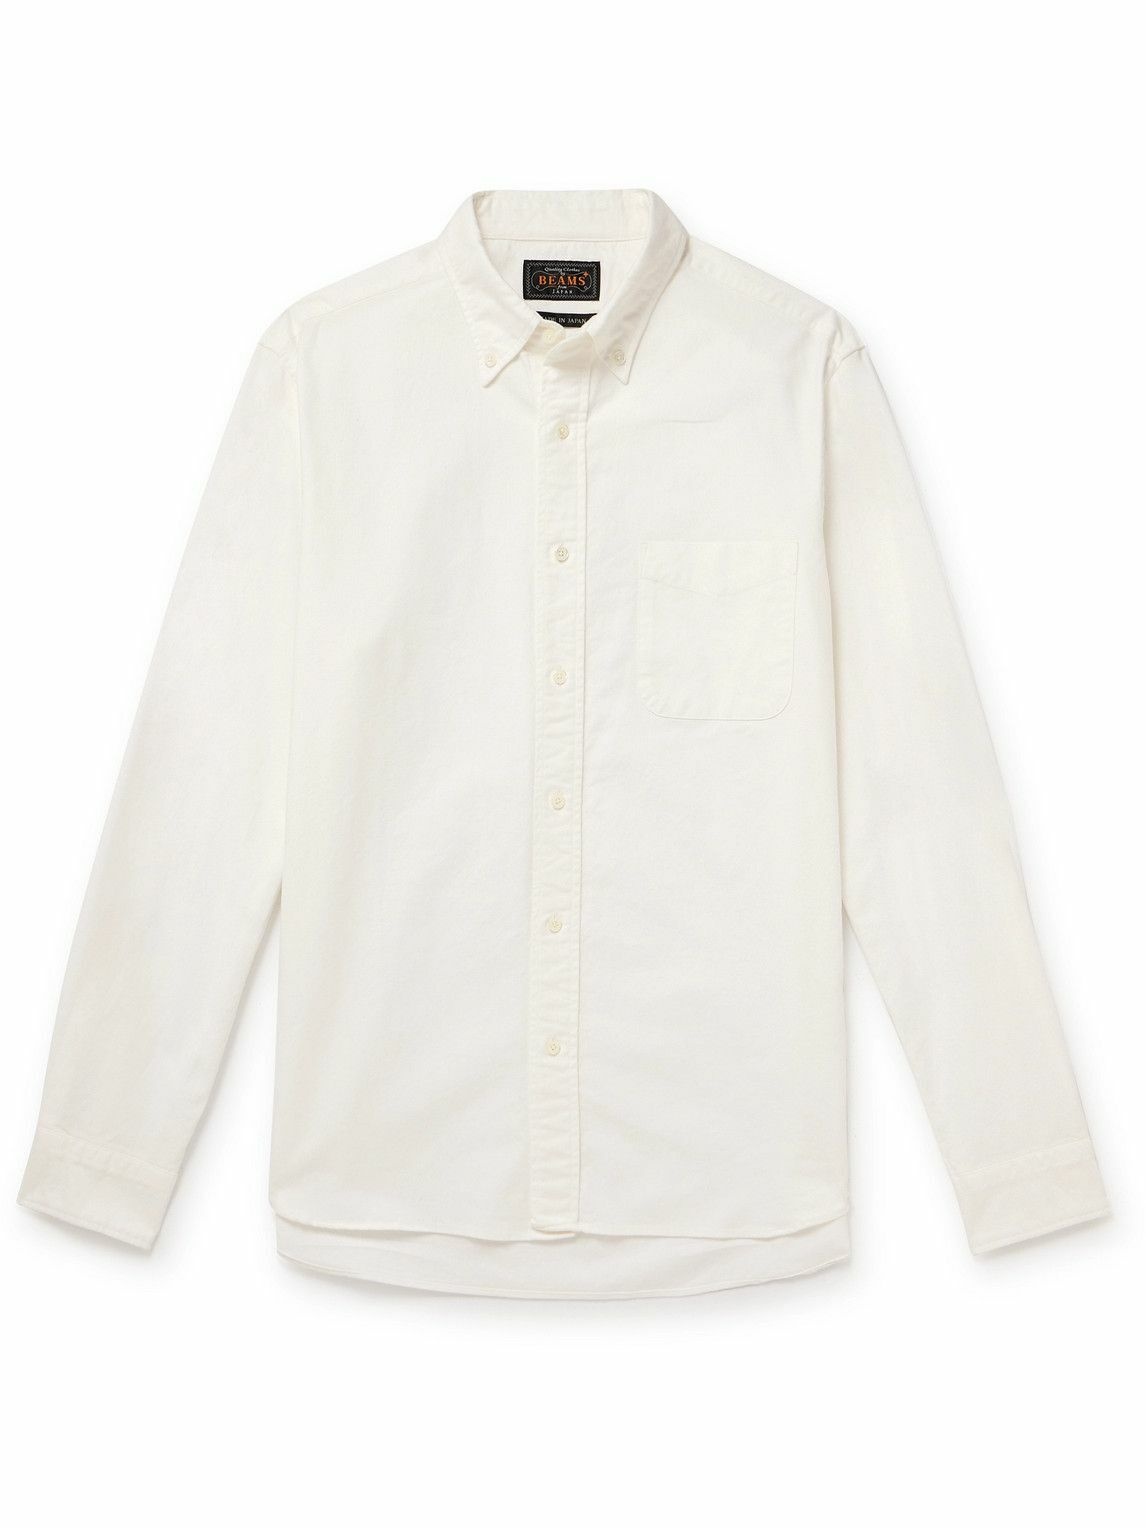 Beams Plus - Button-Down Cotton Oxford Shirt - White Beams Plus